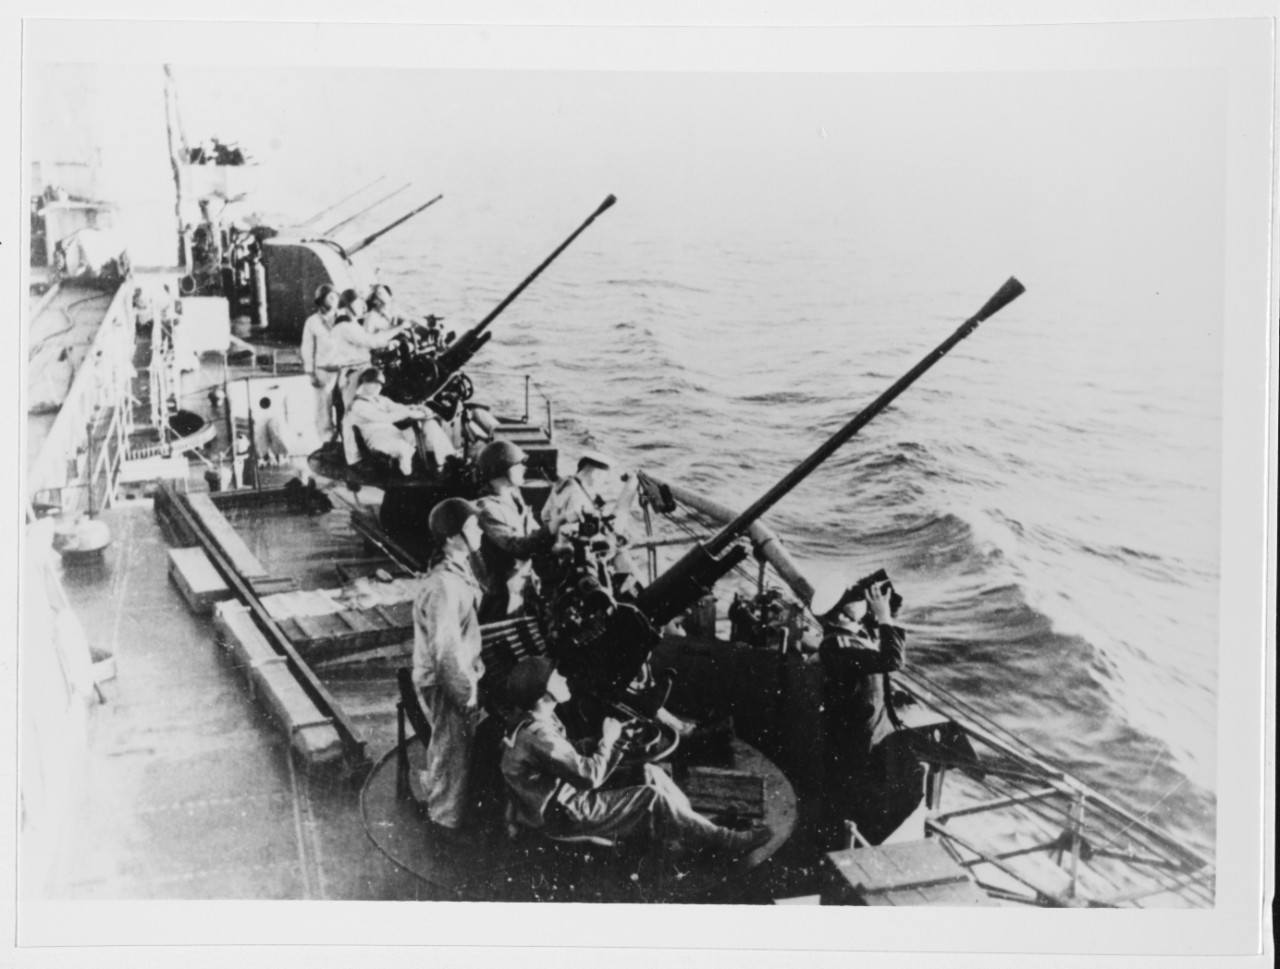 37mm, 63-caliber model 1939 anti-aircraft guns aboard a Soviet Kirov class cruiser in the Black Sea in 1943.